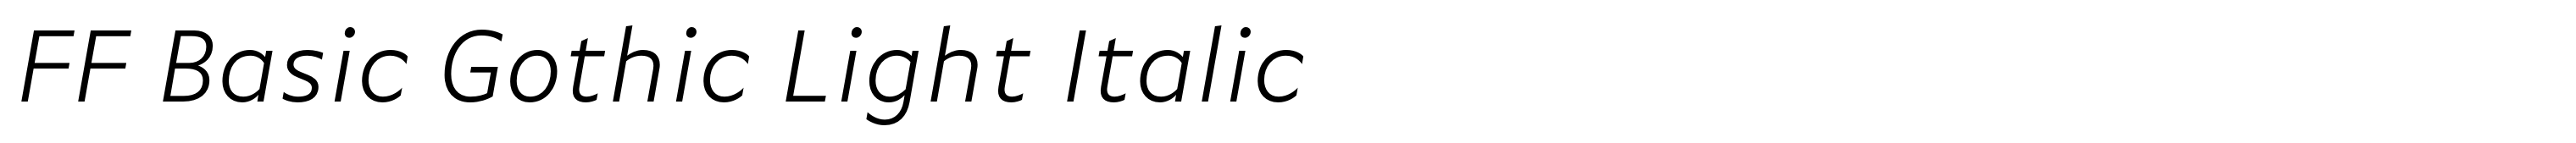 FF Basic Gothic Light Italic